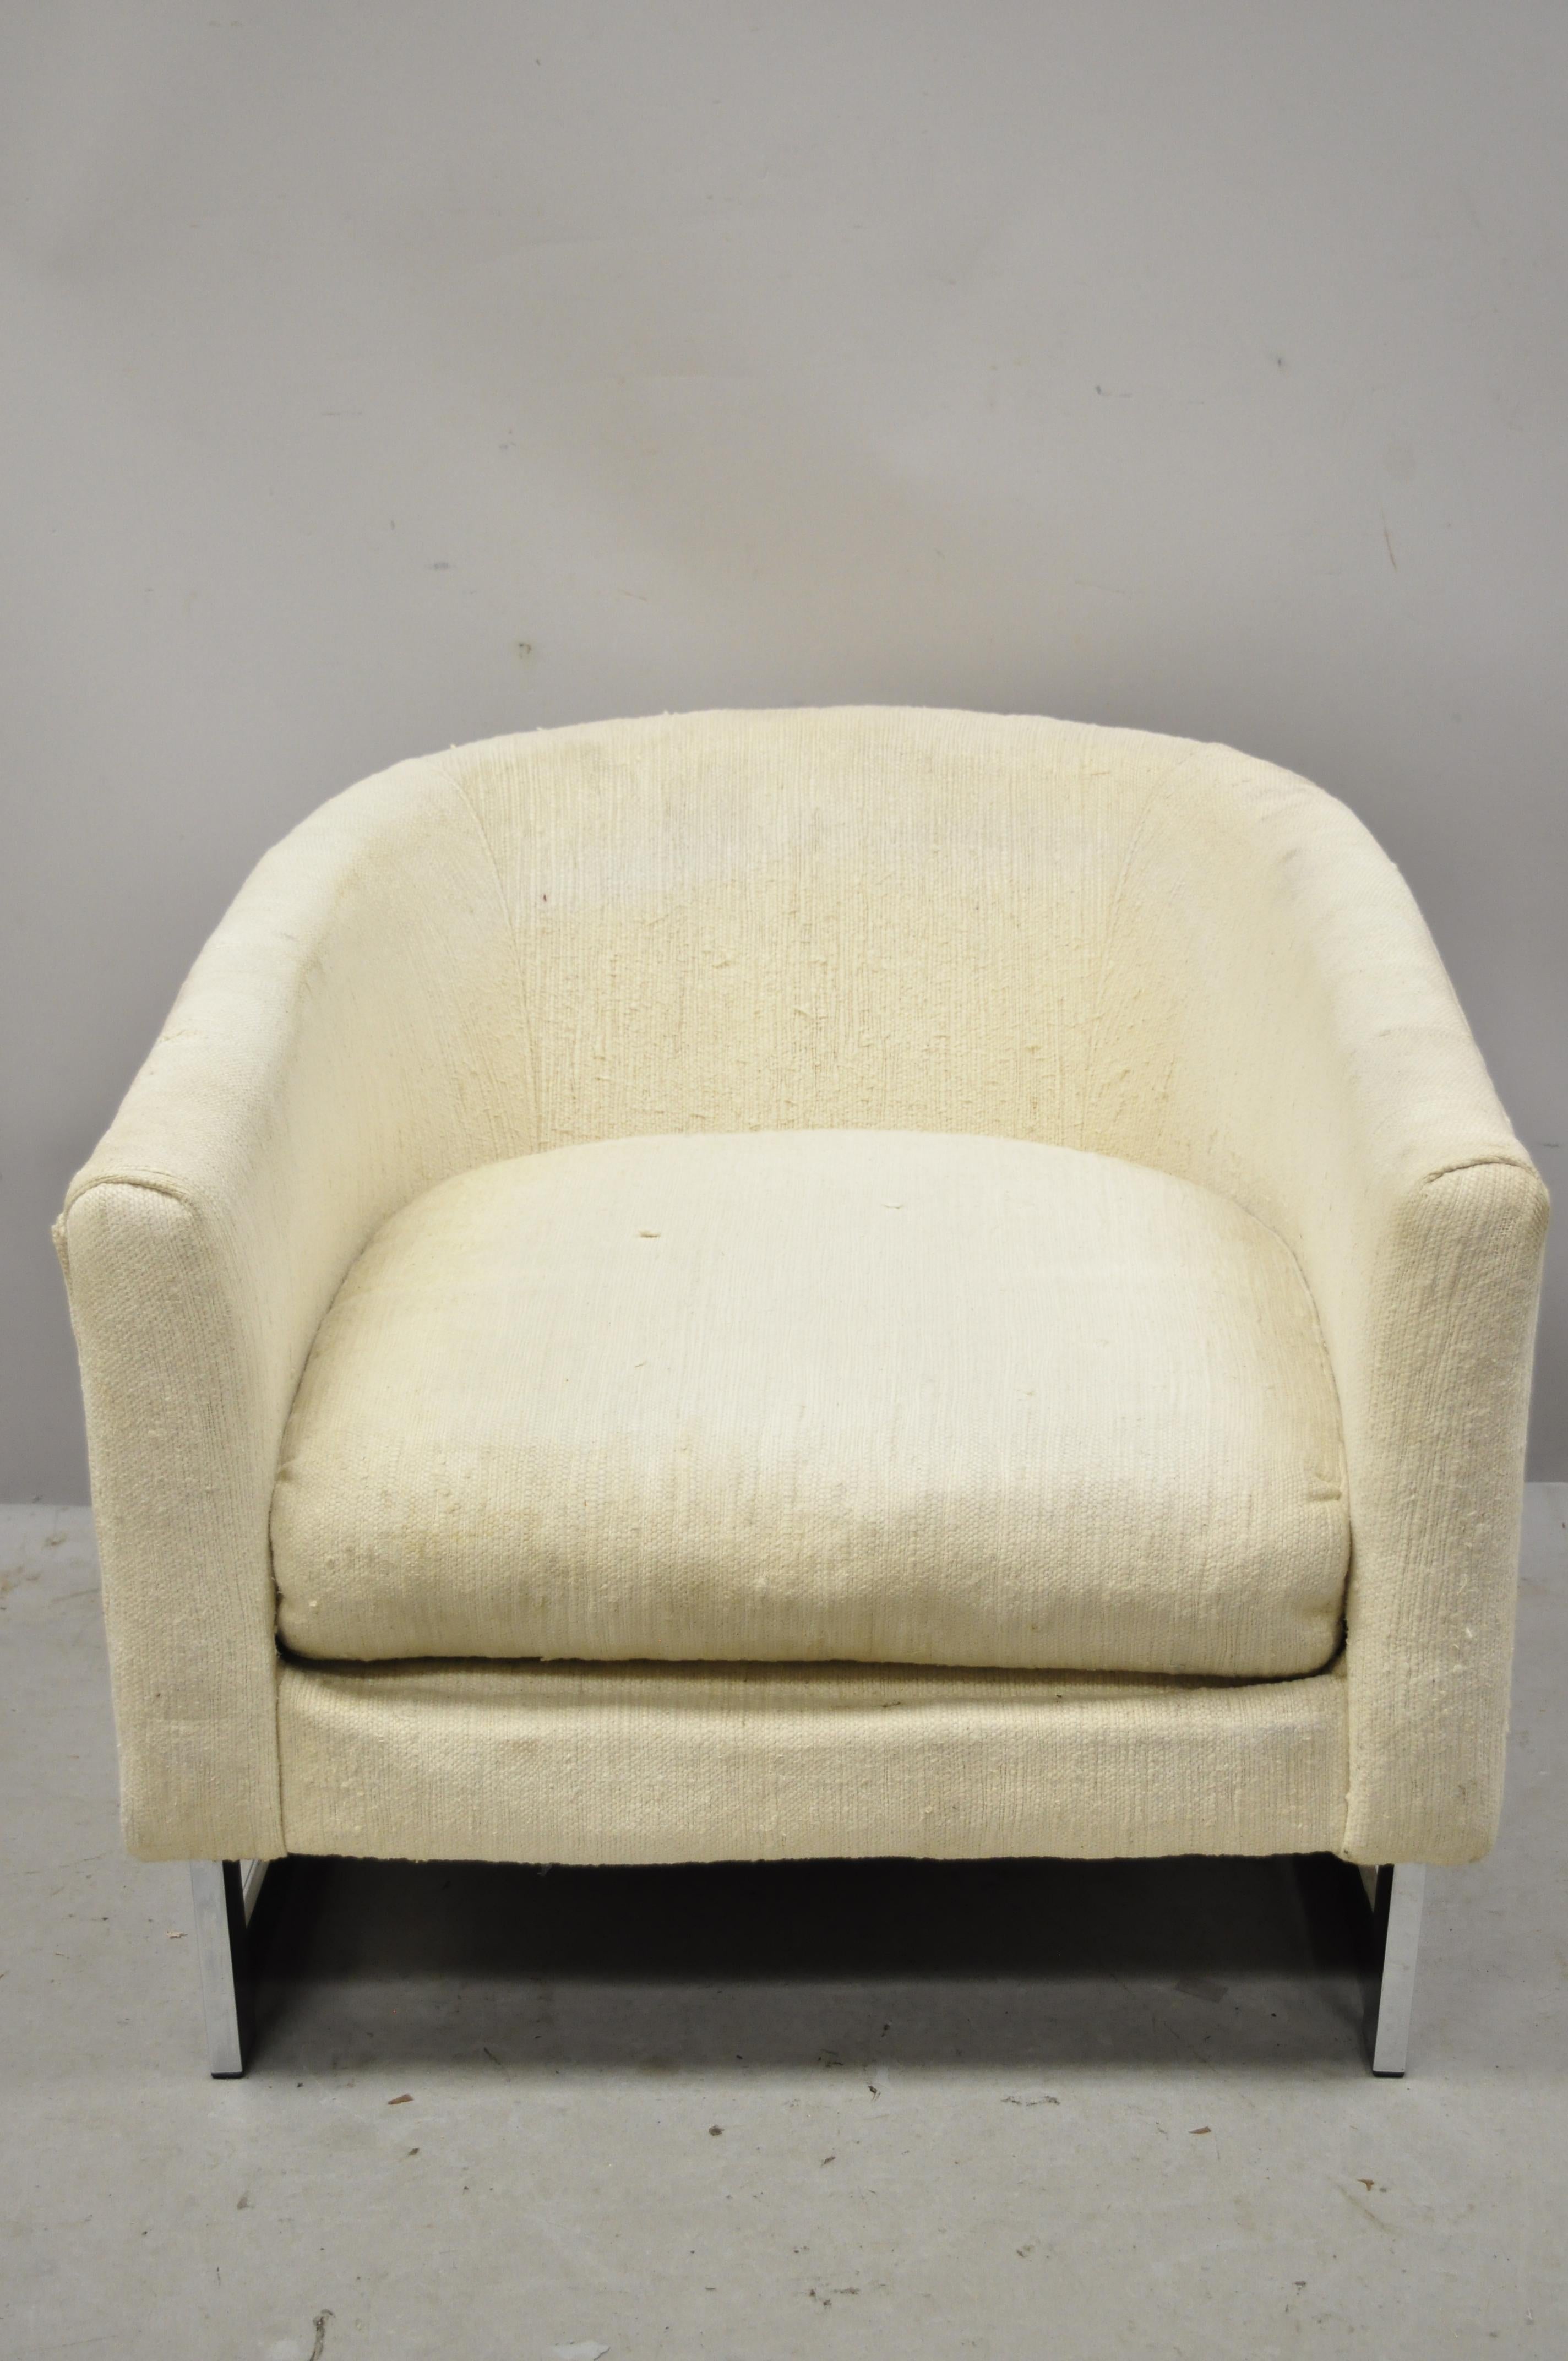 Vintage midcentury Rowe chrome barrel back Milo Baughman lounge club chair. Item features wide barrel back frames, chrome base, original label, very nice vintage item, clean modernist lines, circa mid-late 20th century.
Measurements: 27